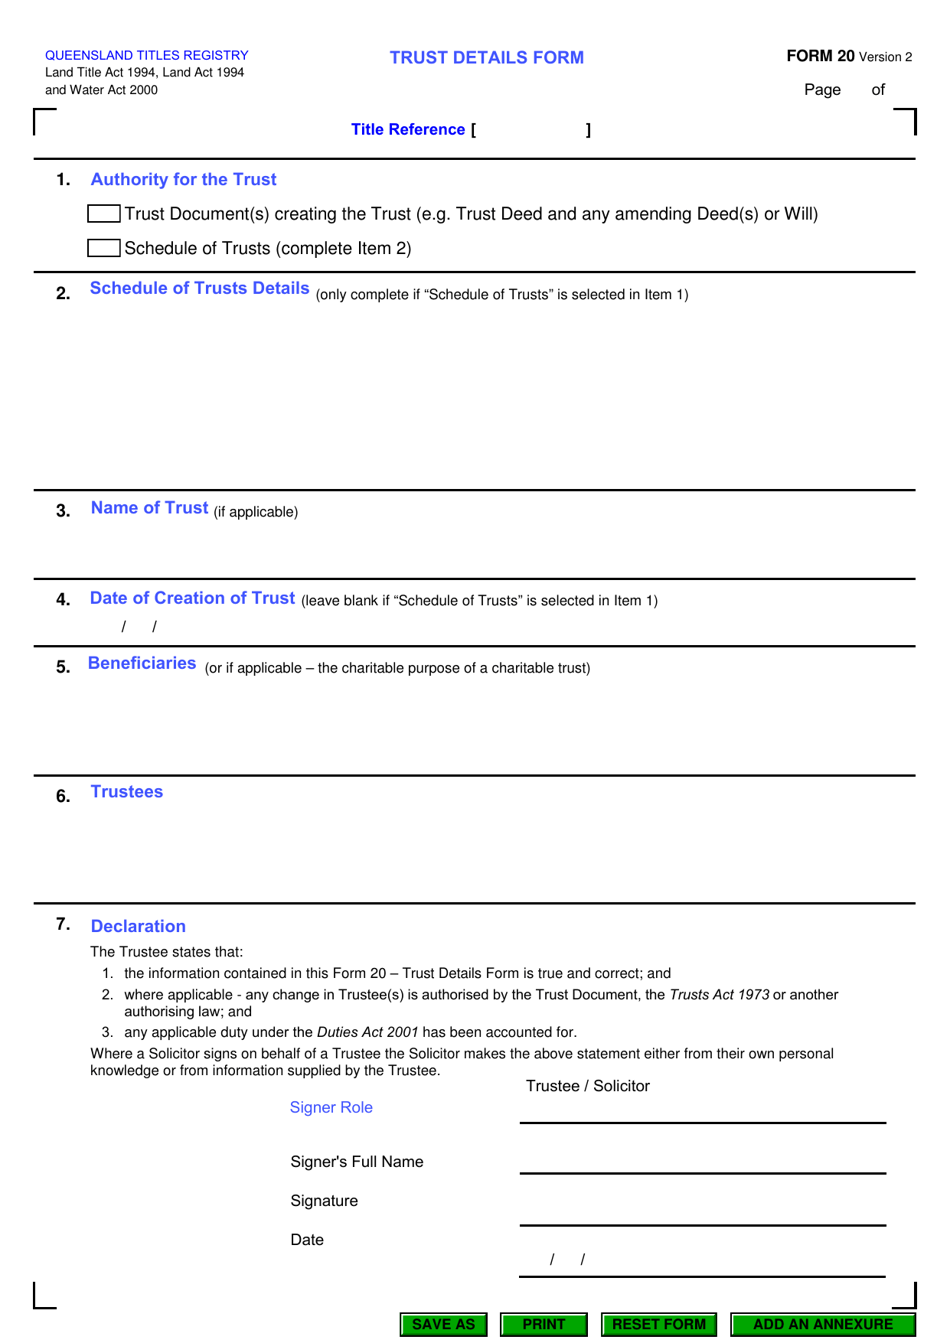 Form 20 Trust Details Form - Queensland, Australia, Page 1